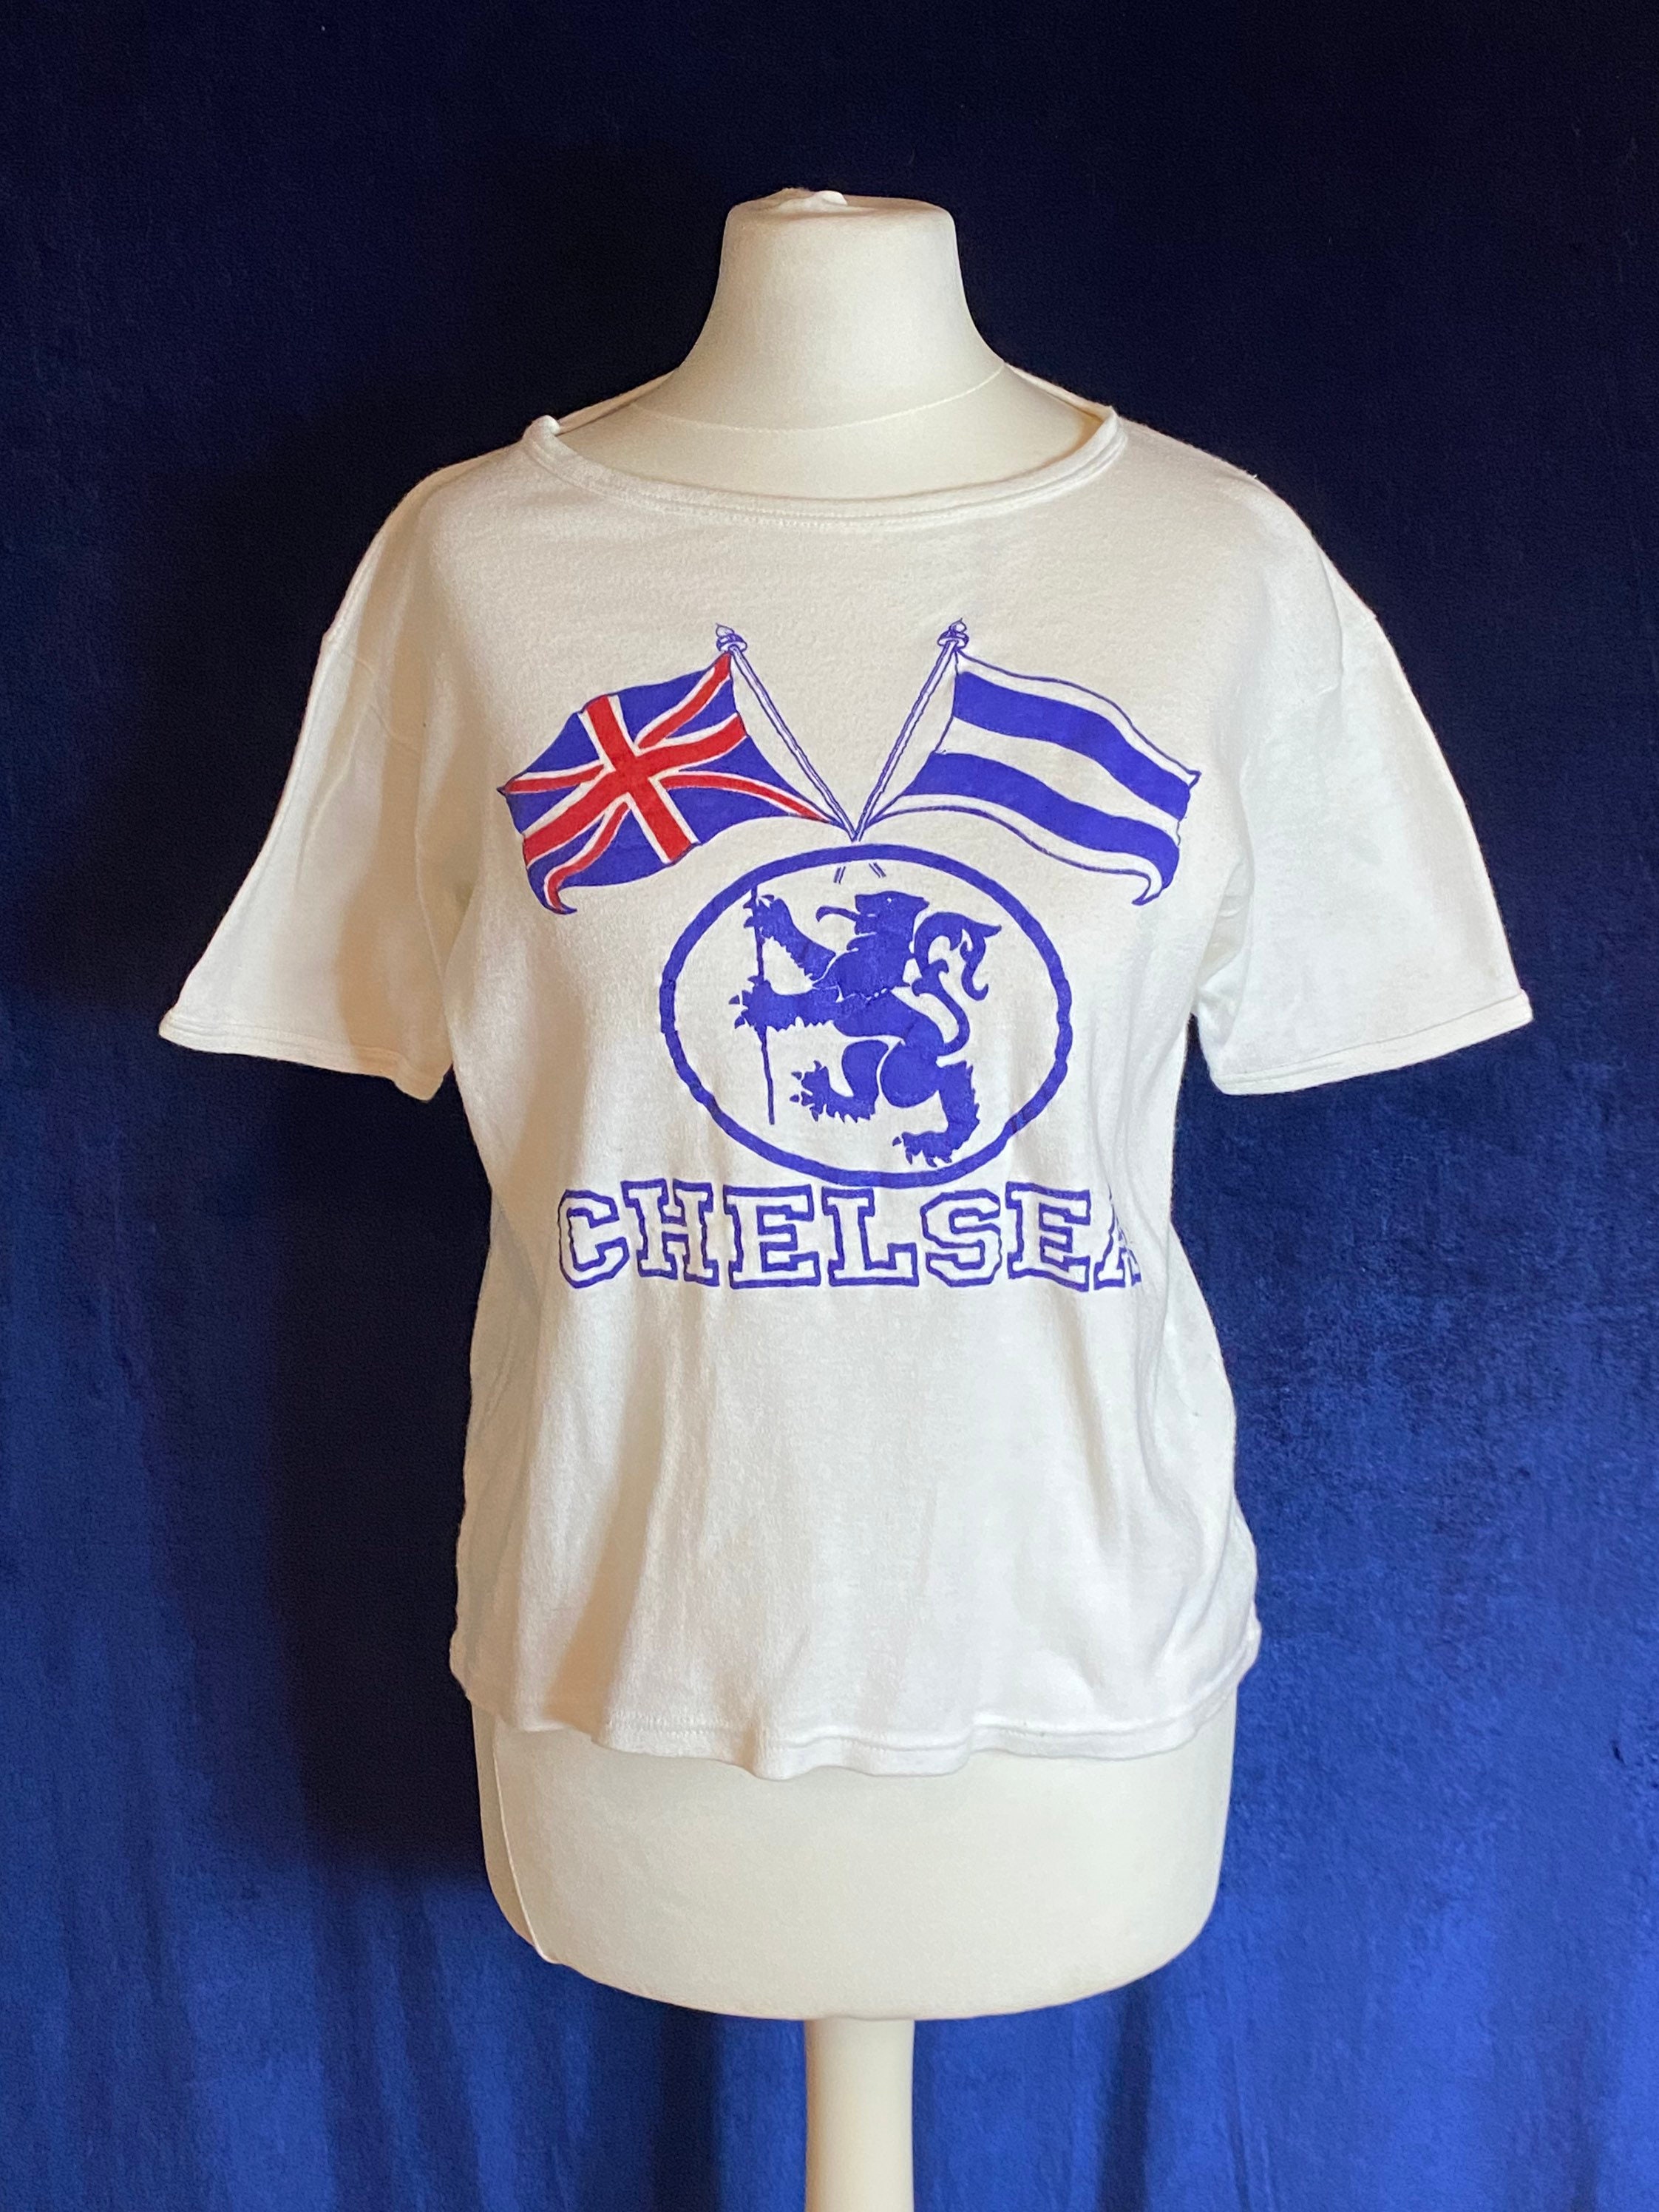 Chelsea Retro Football Shirt Personalised Printed Gifts